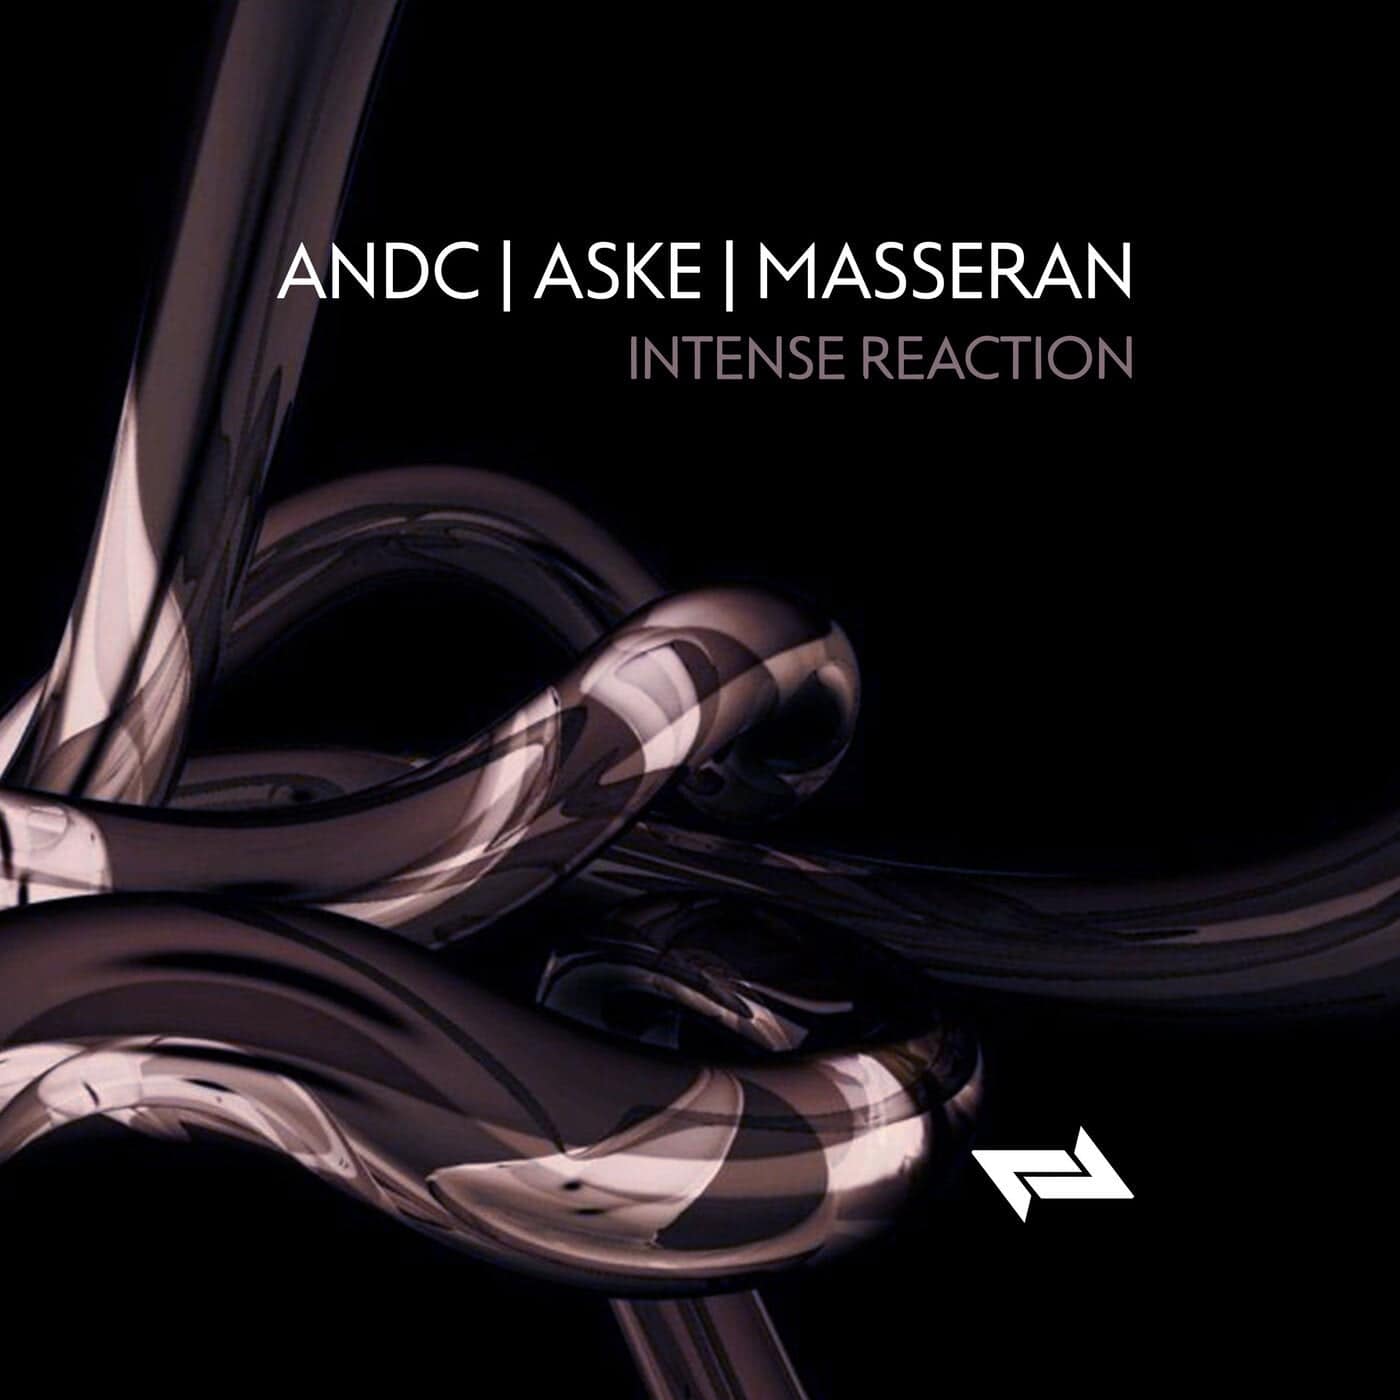 Download Andc, ASKE, Masseran - Intense Reaction on Electrobuzz